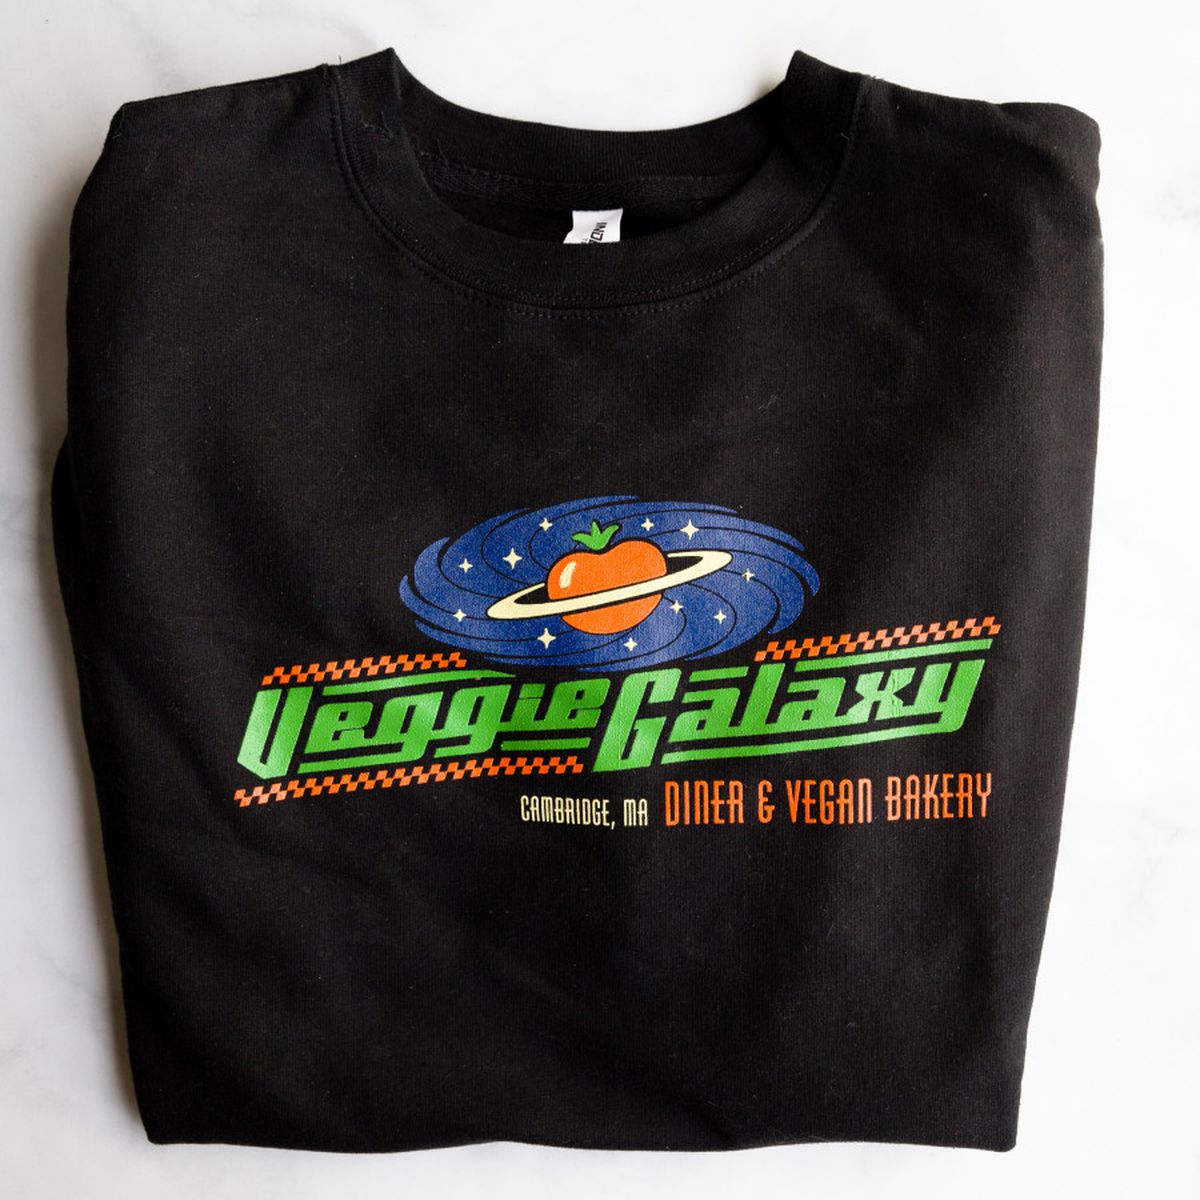 Black crewneck sweatshirt has large, colorful Veggie Galaxy design across the front